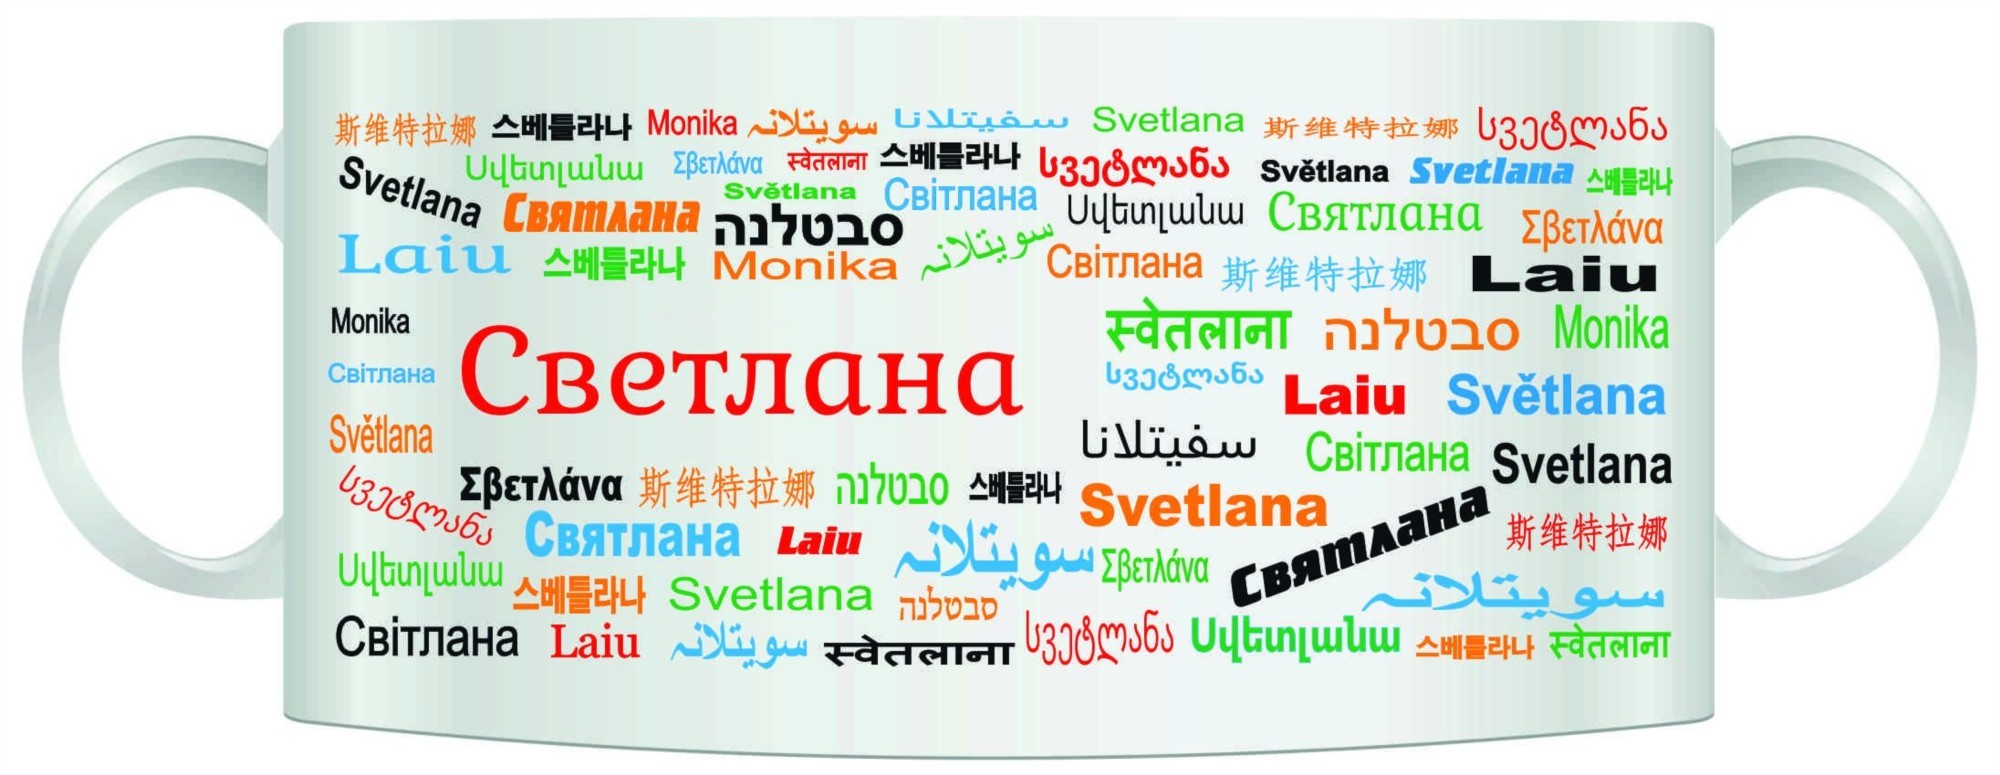 Имя света на разных языках